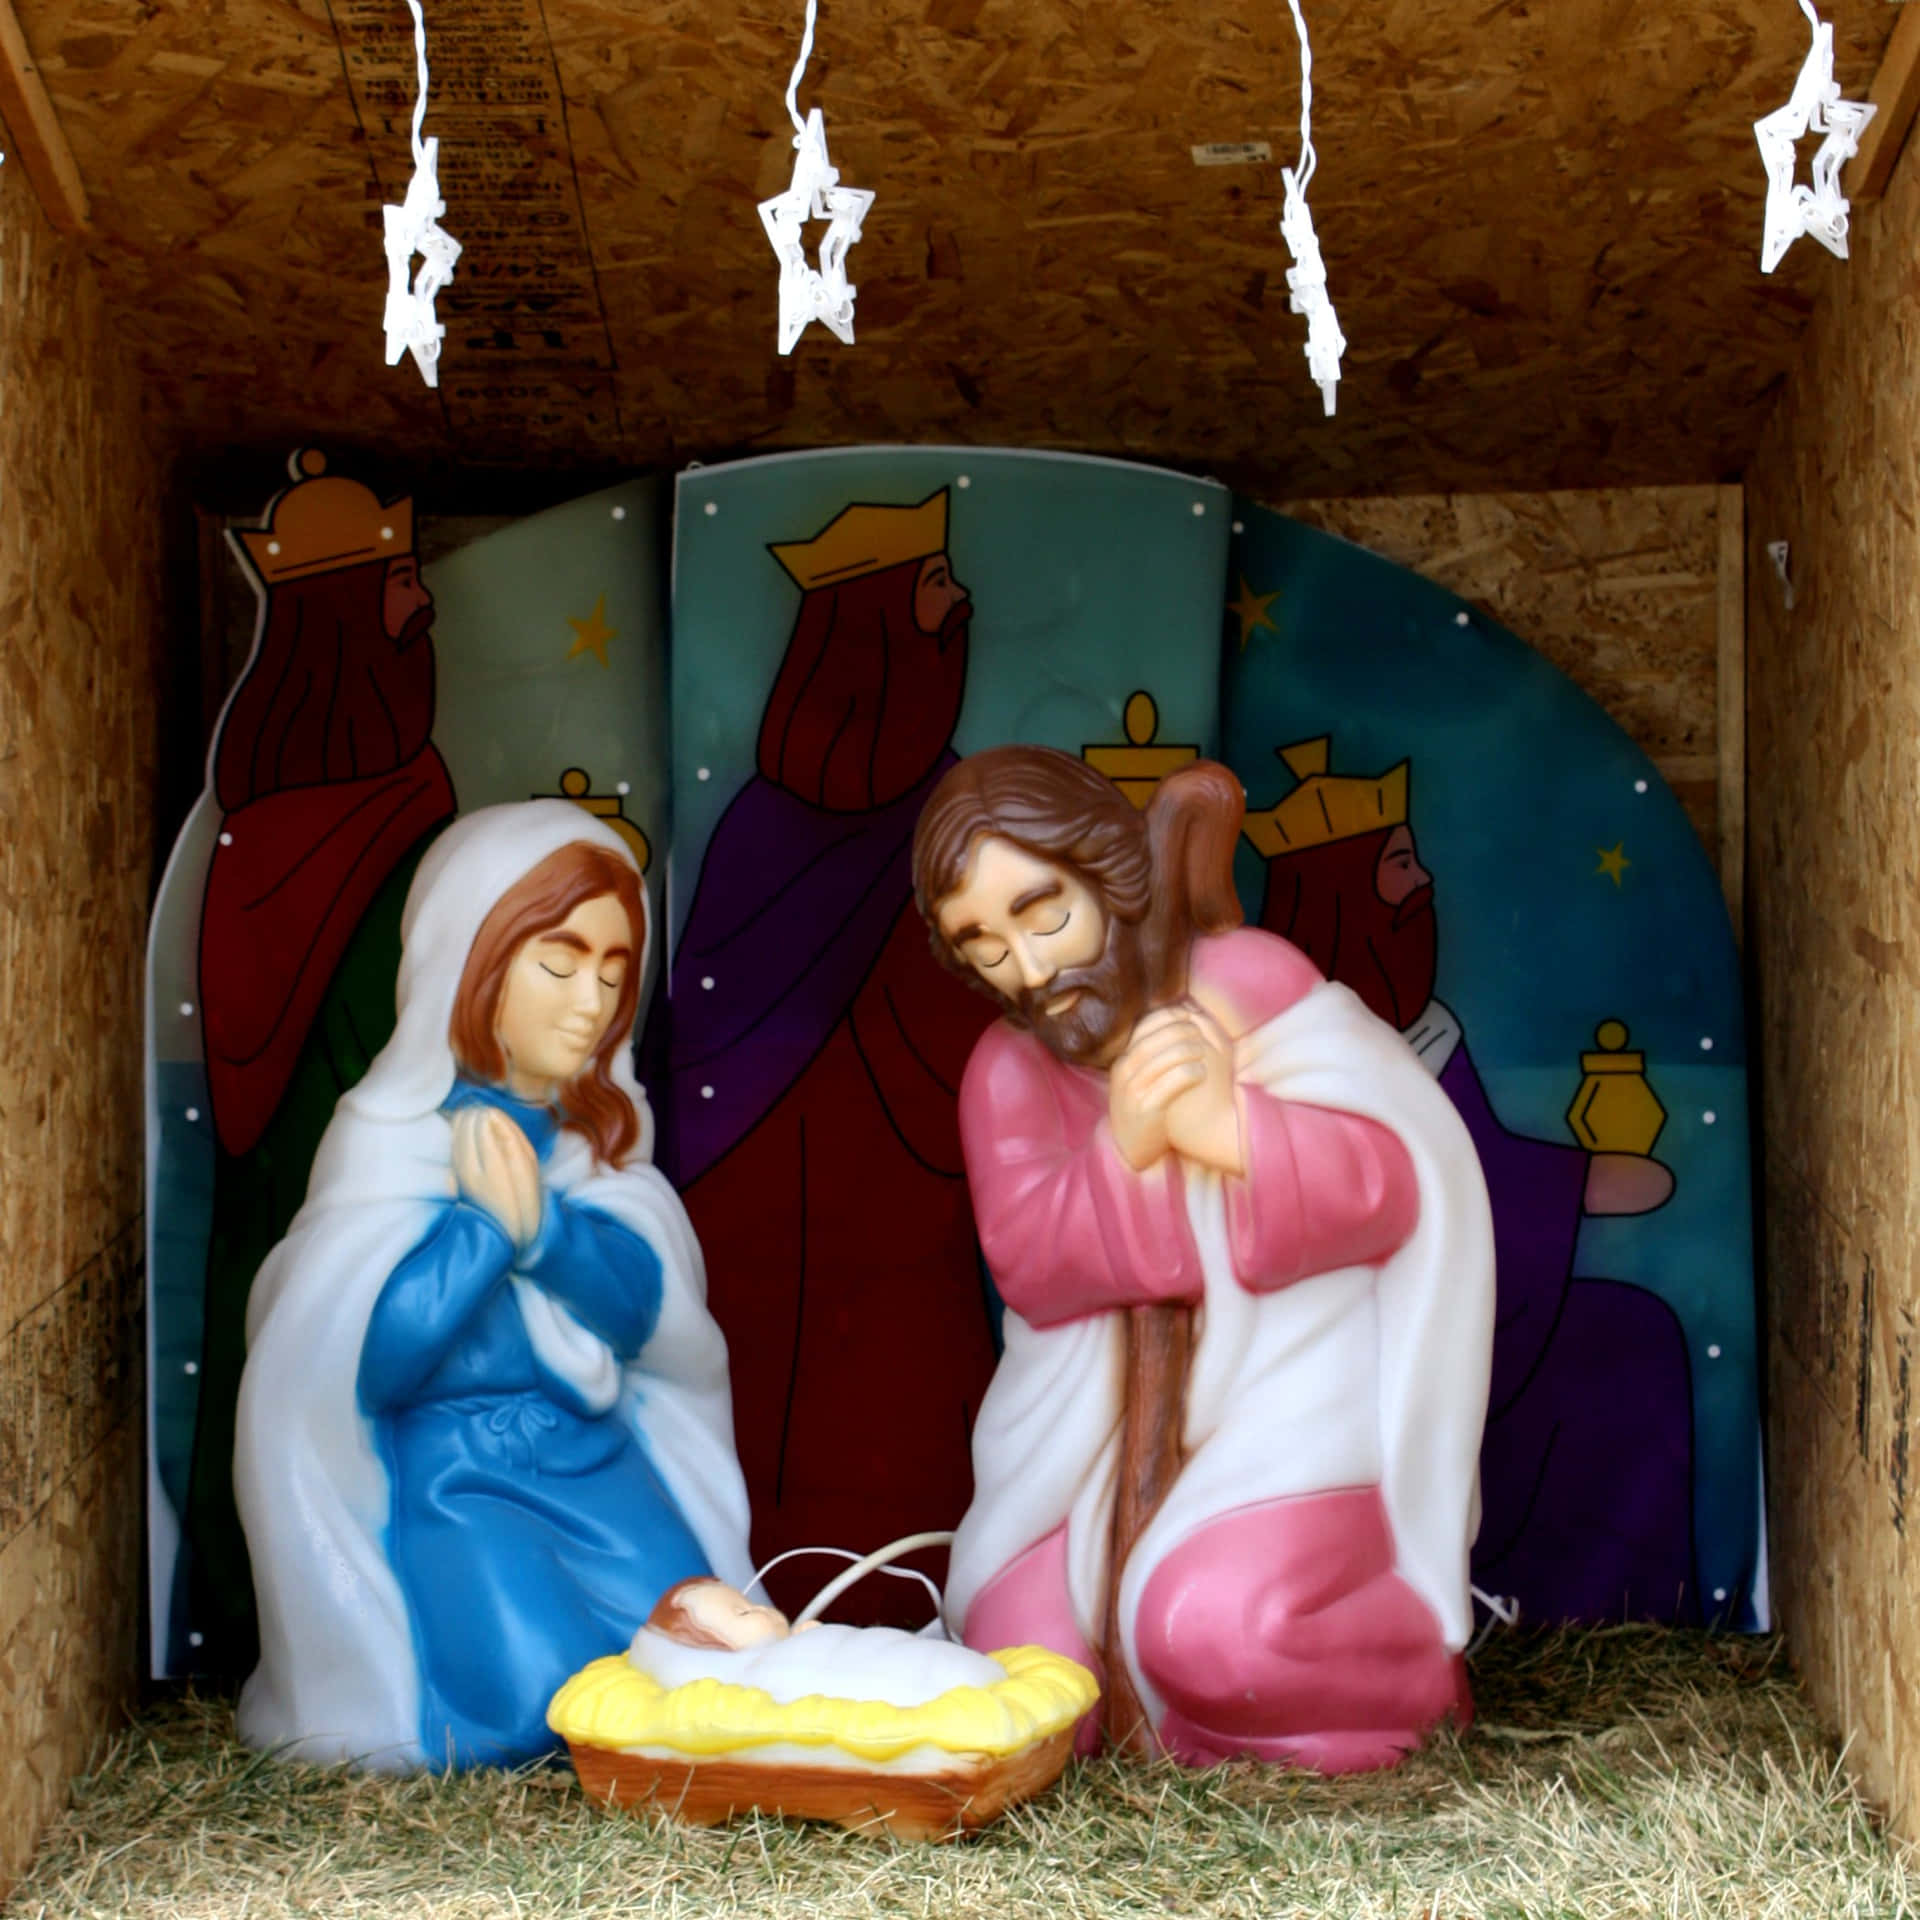 The Nativity Story in Bethlehem